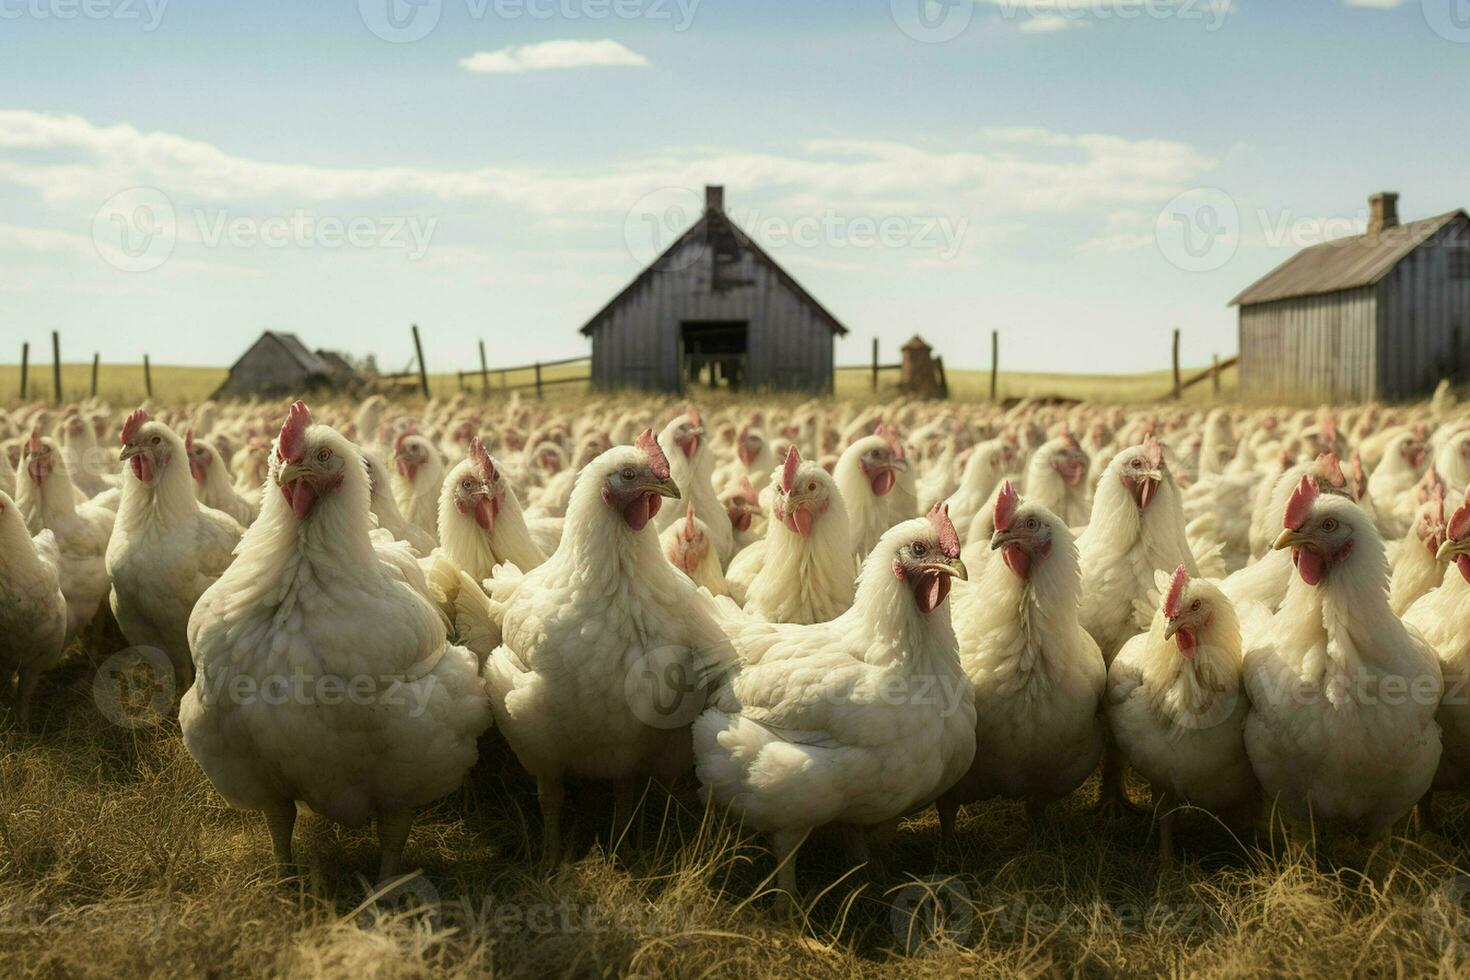 kippen Aan traditioneel vrij reeks gevogelte boerderij. kippen Aan de boerderij. selectief focus. natuur. ai gegenereerd pro foto